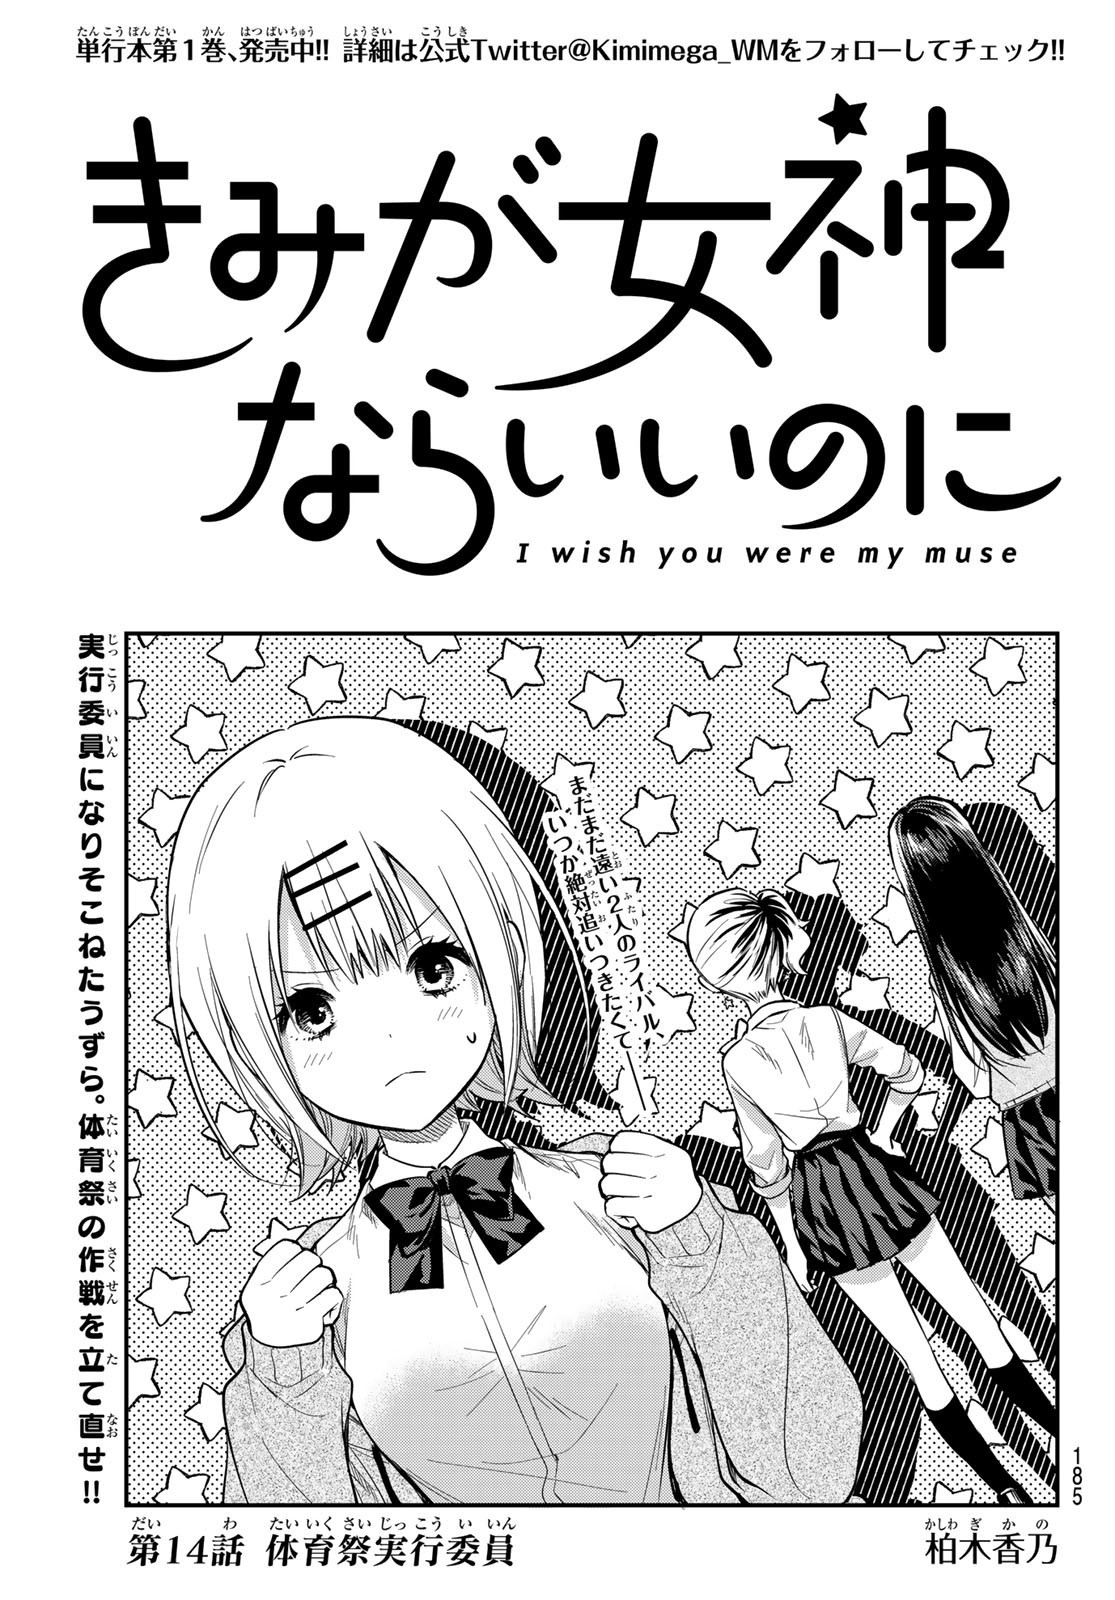 Kimi ga Megami Nara Ii no ni (I Wish You Were My Muse) - Chapter 014 - Page 2